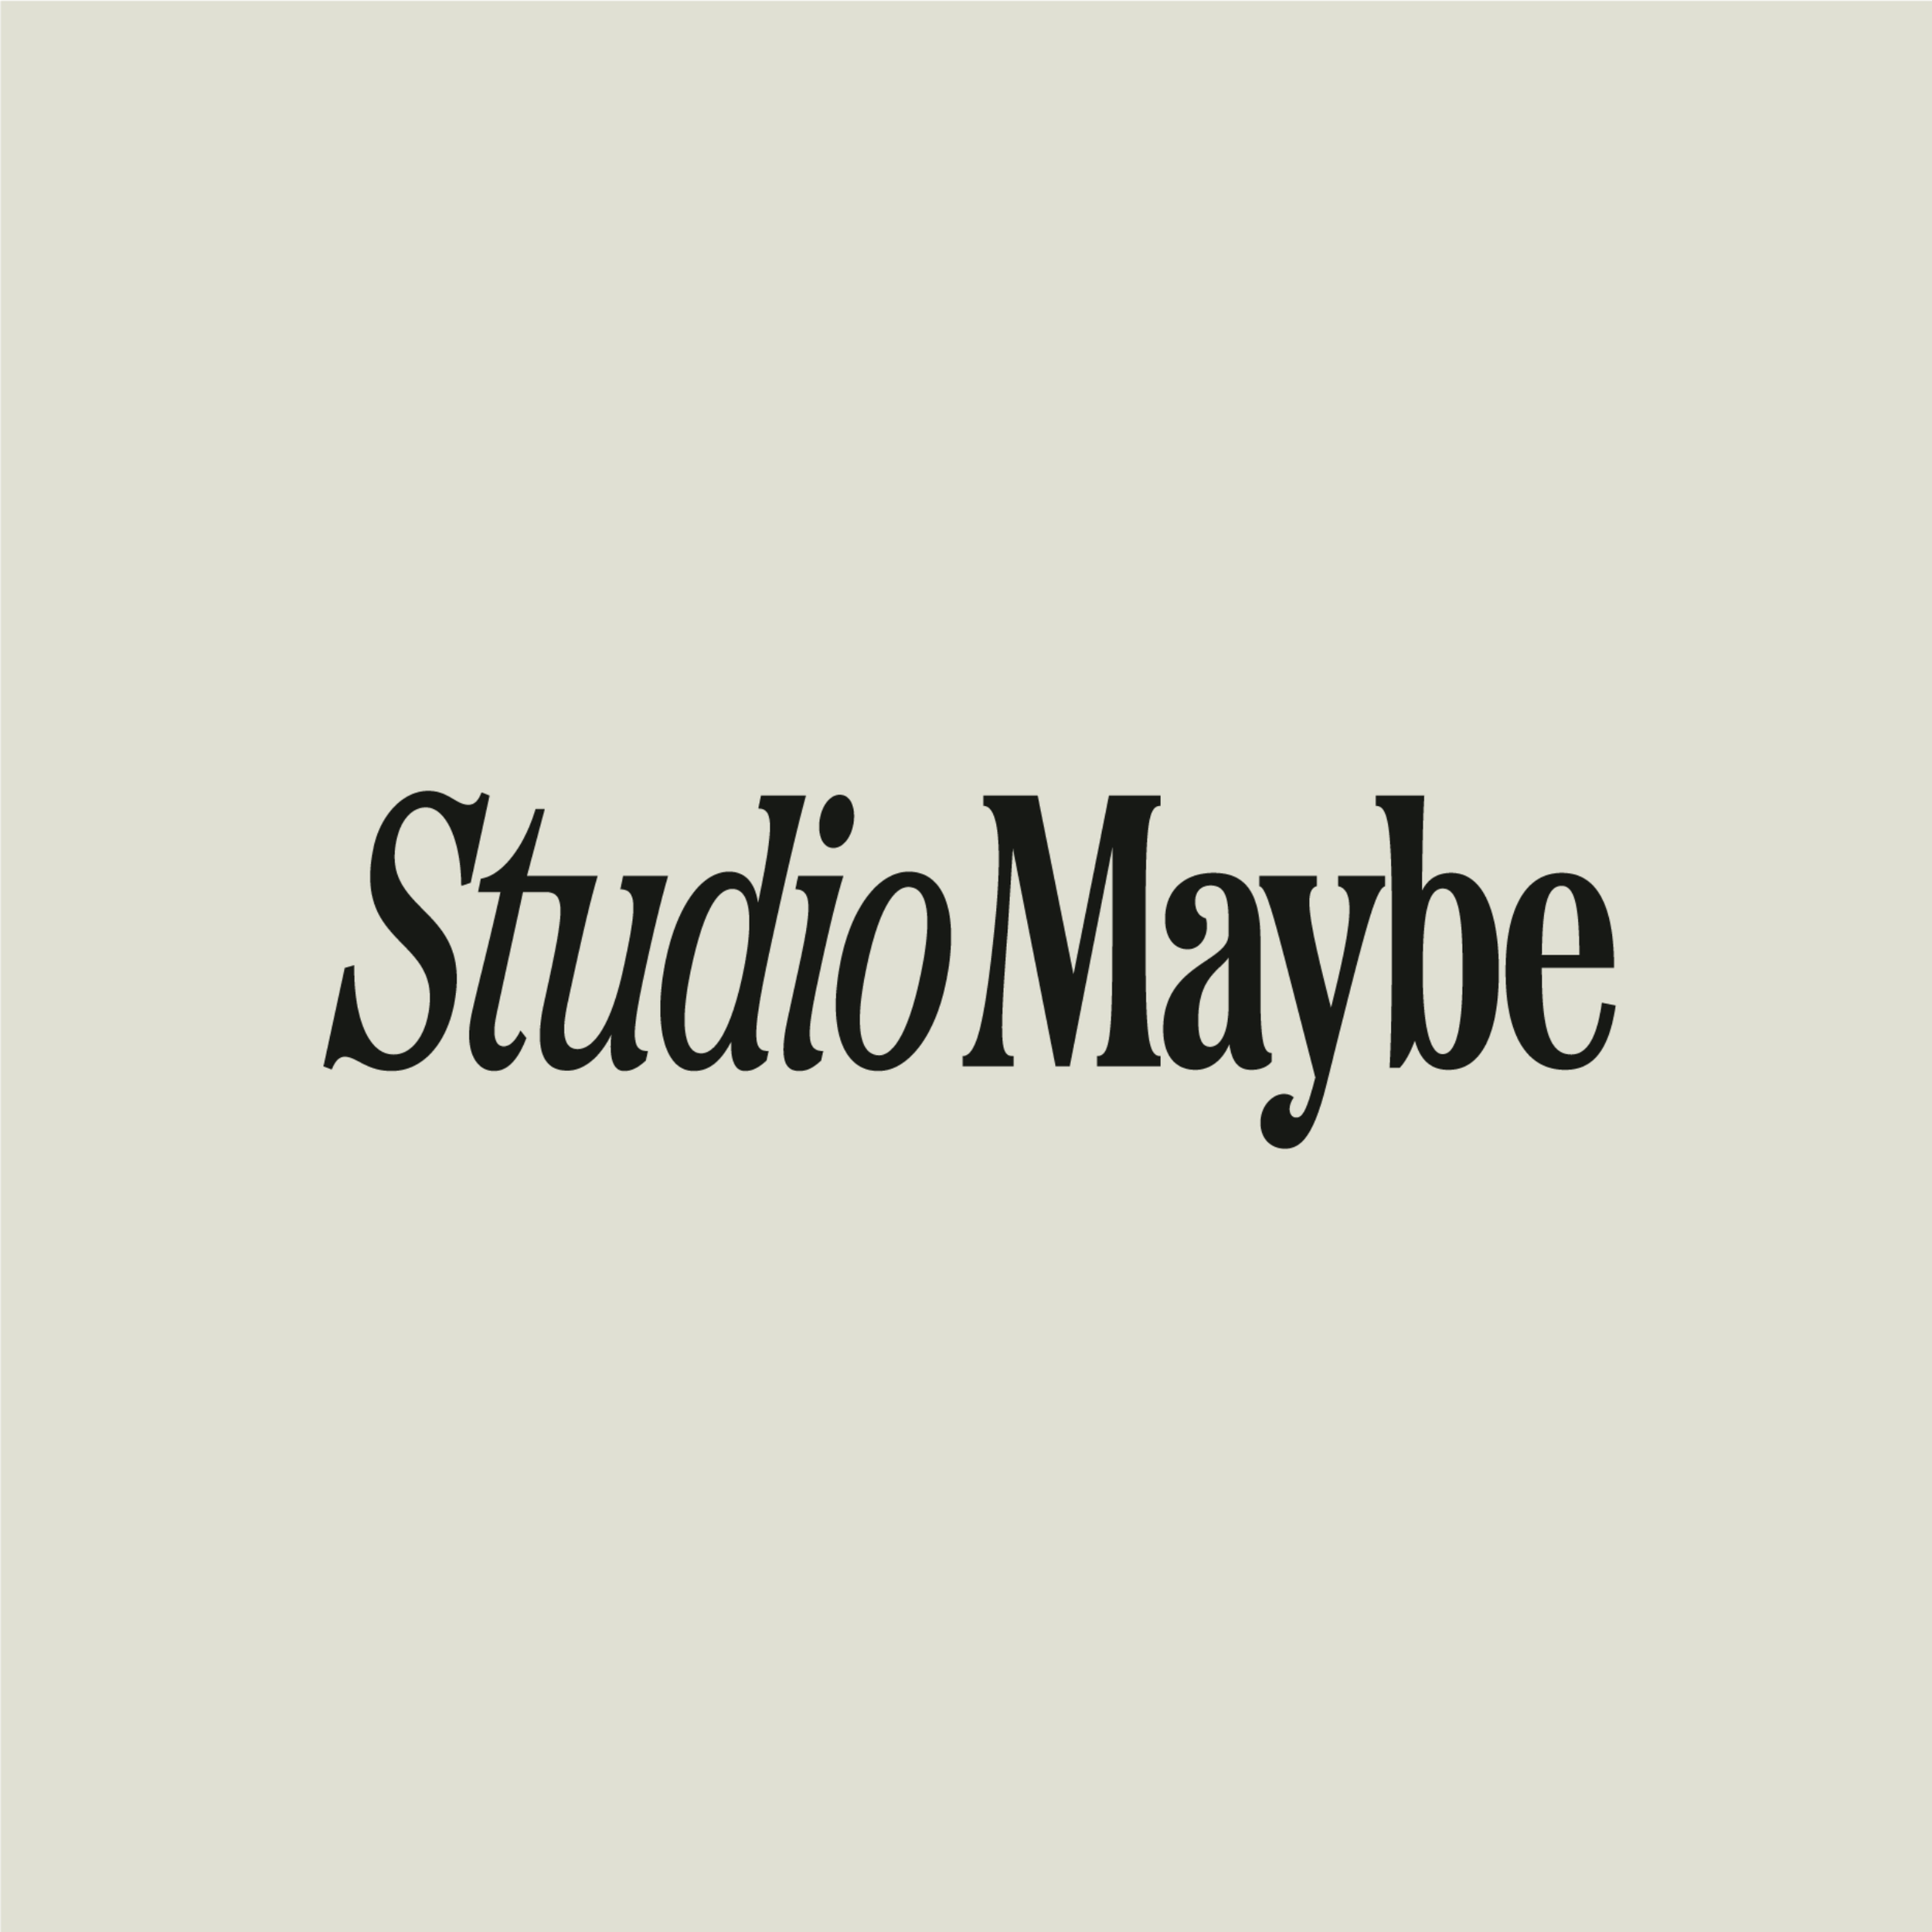 Studio Maybe